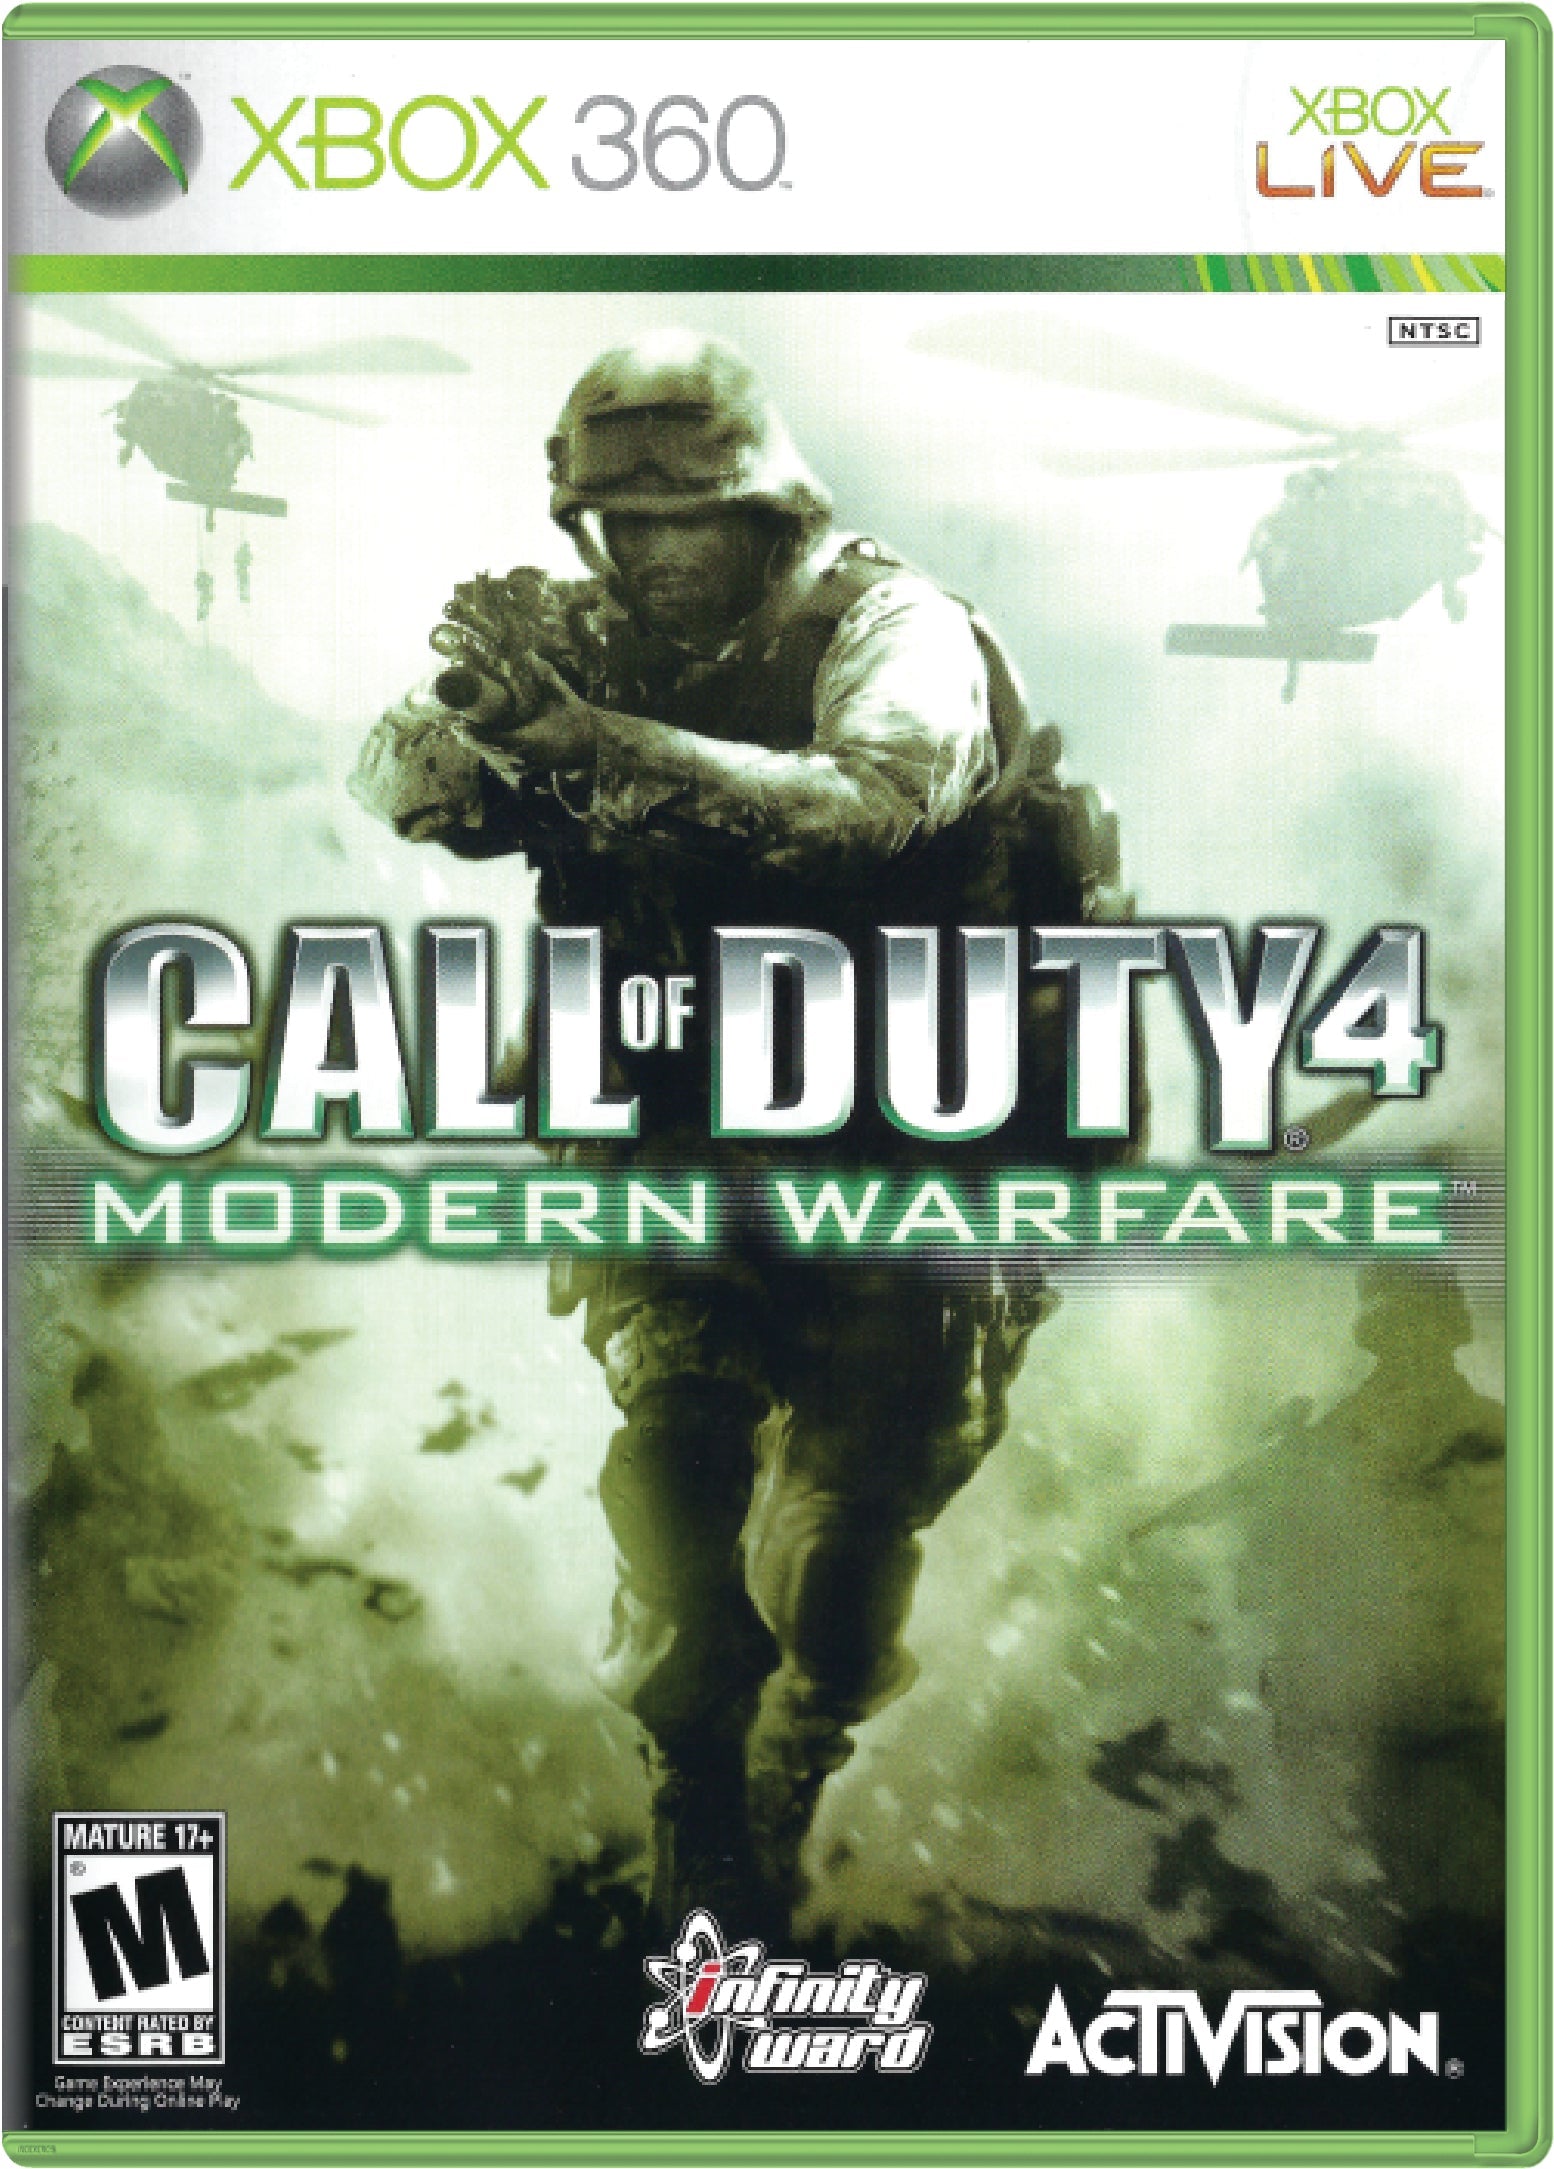 Call of Duty 4 Modern Warfare Cover Art